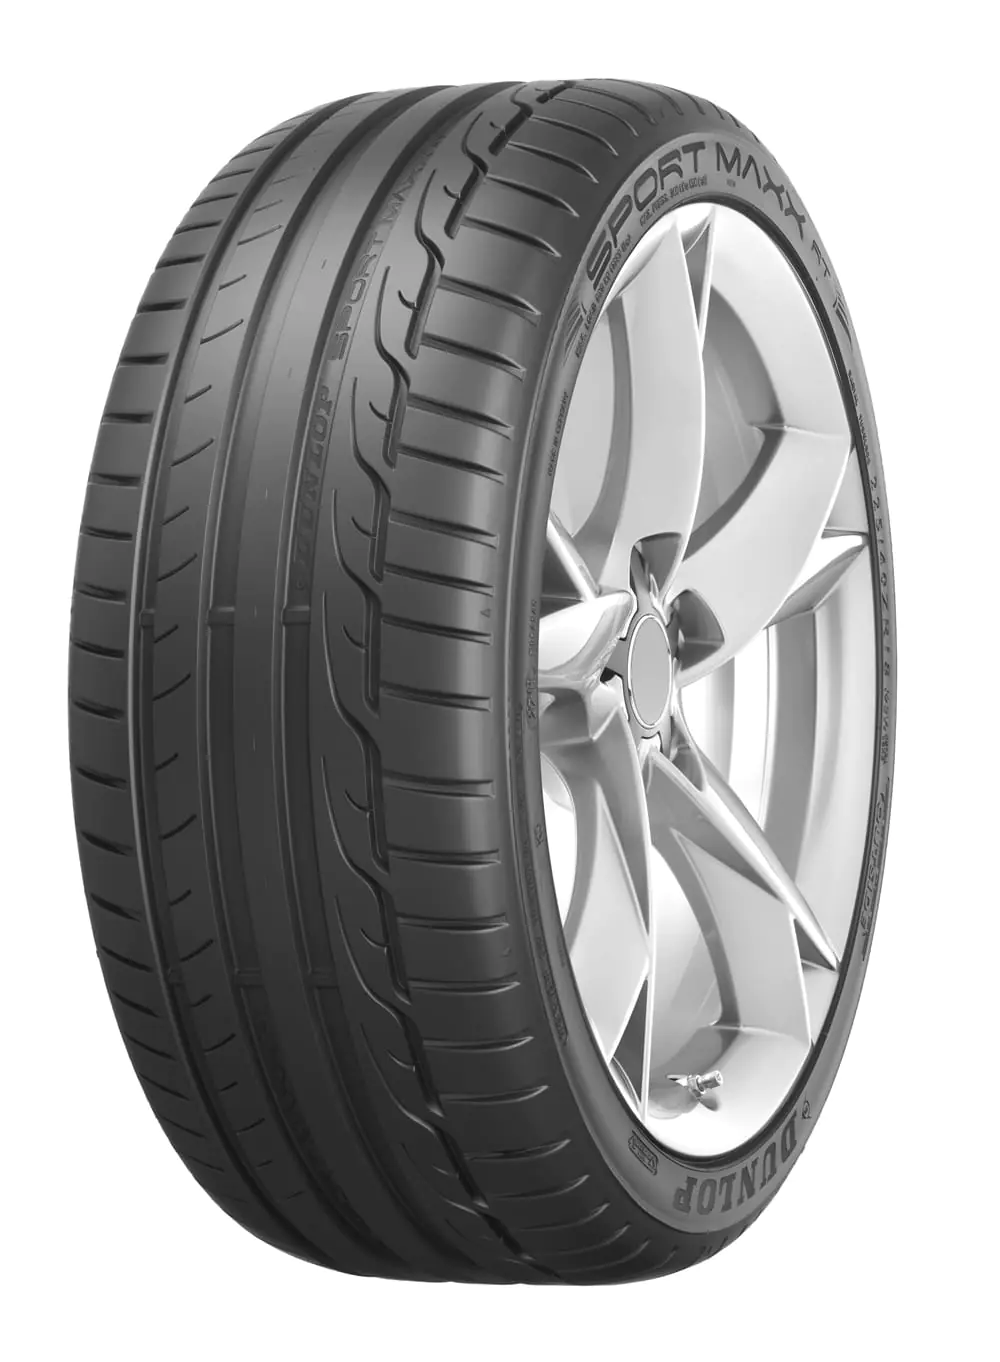 Dunlop Dunlop 215/50 R17 91Y SP MAXXRT MFS pneumatici nuovi Estivo 